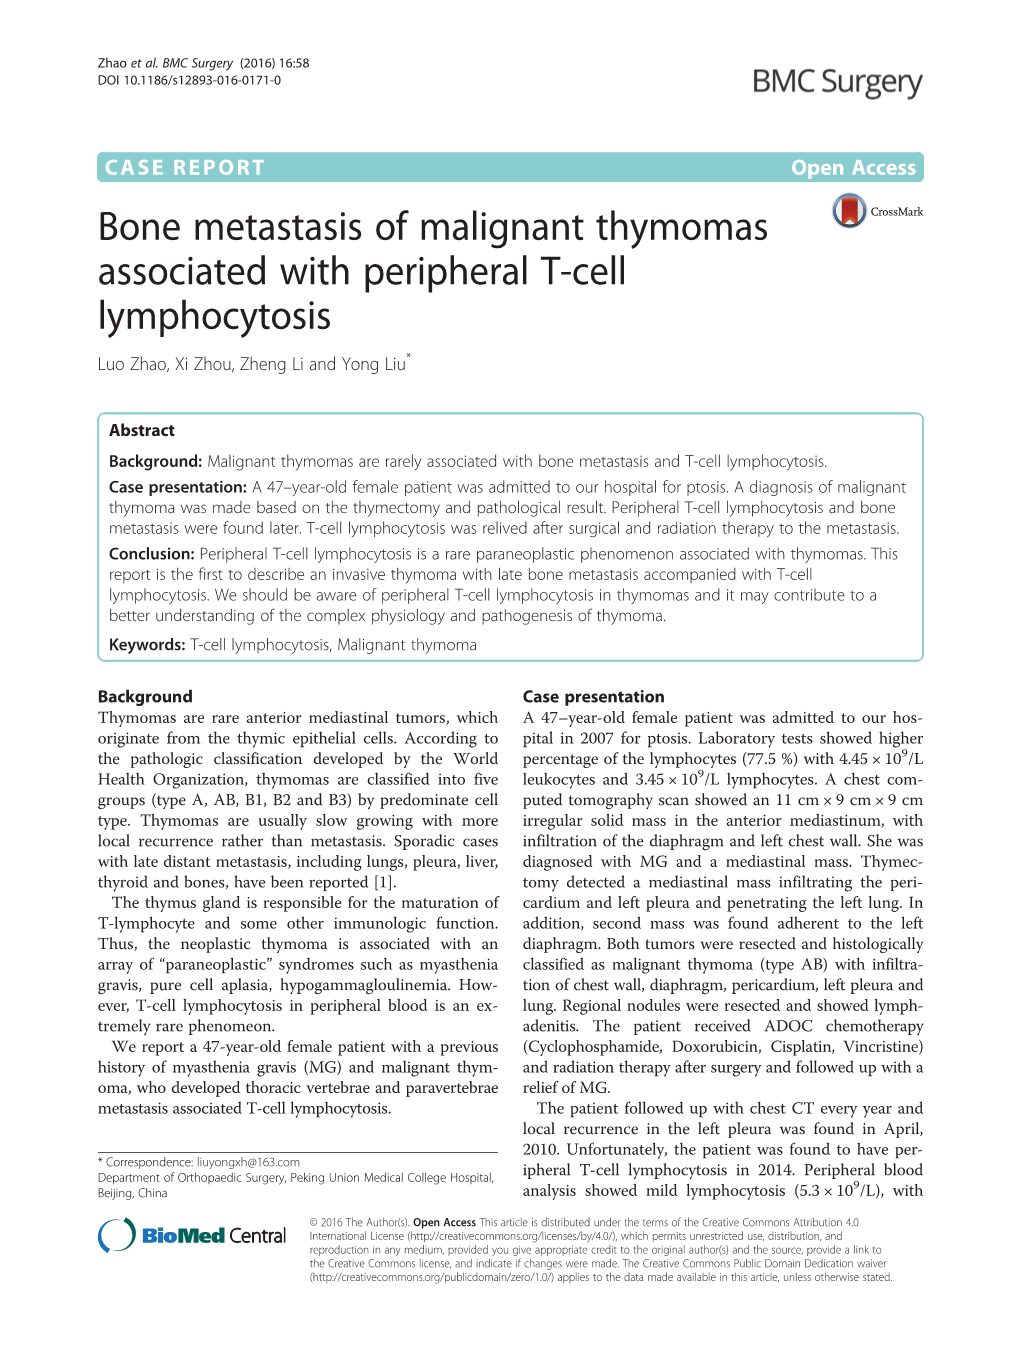 Bone Metastasis of Malignant Thymomas Associated with Peripheral T-Cell Lymphocytosis Luo Zhao, Xi Zhou, Zheng Li and Yong Liu*